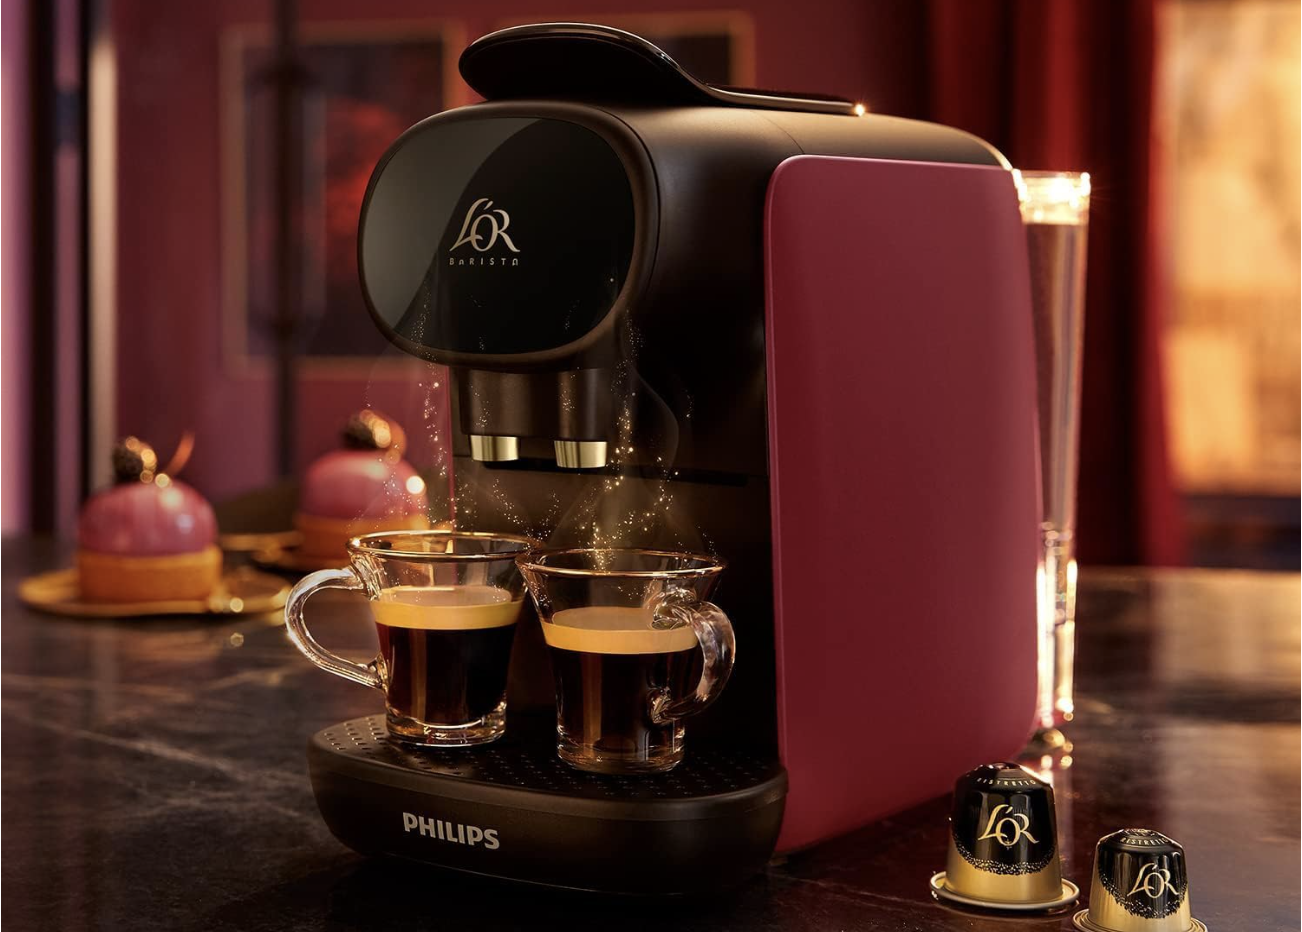 Philips L’or Barista coffee machine